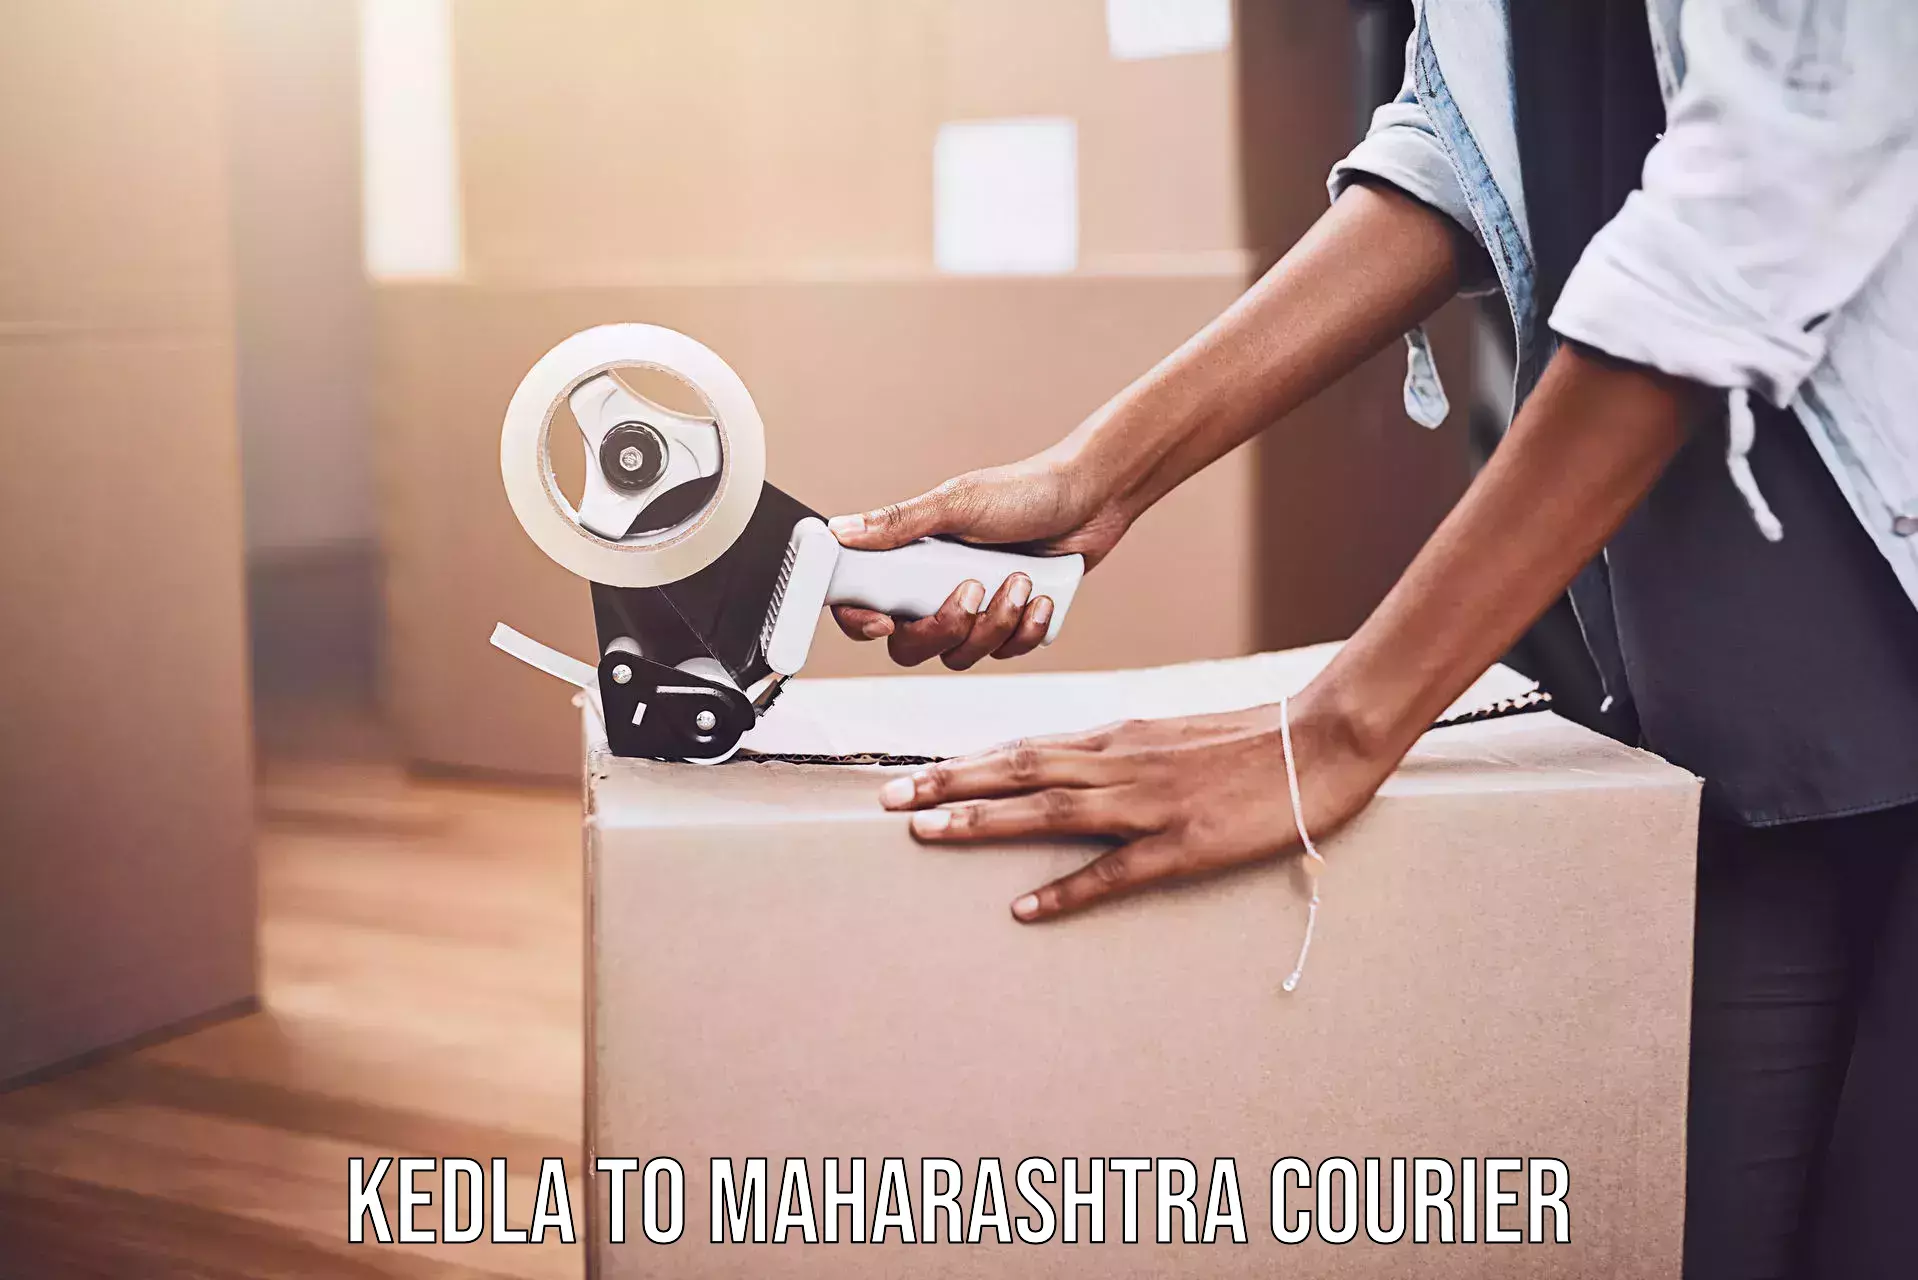 Pharmaceutical courier Kedla to Kolhapur